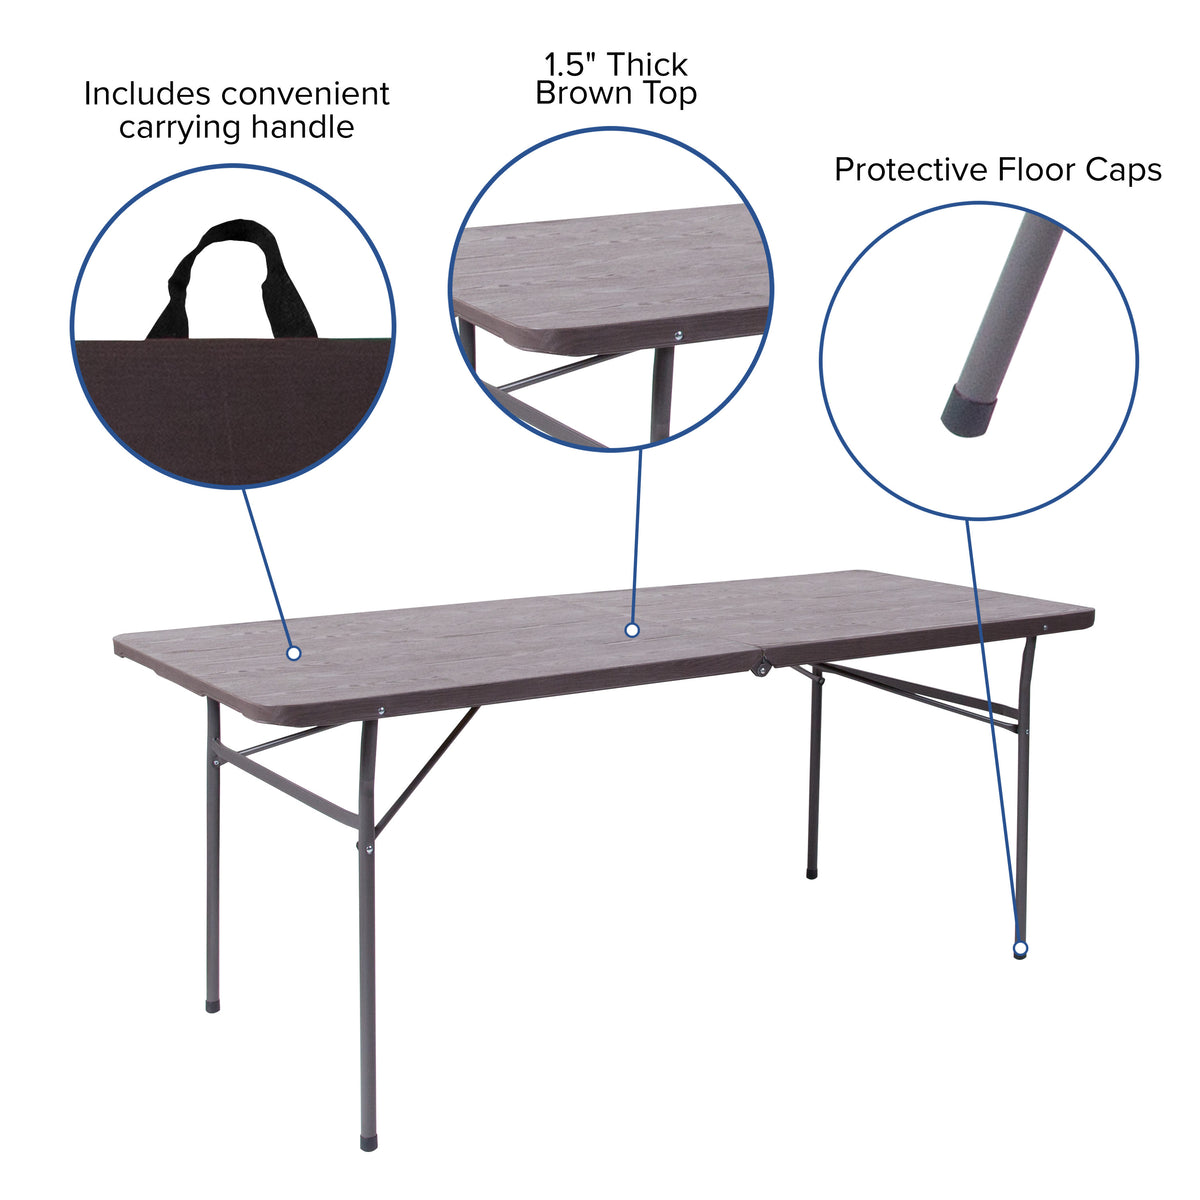 Brown |#| 6-Foot Bi-Fold Brown Wood Grain Plastic Folding Table with Carrying Handle